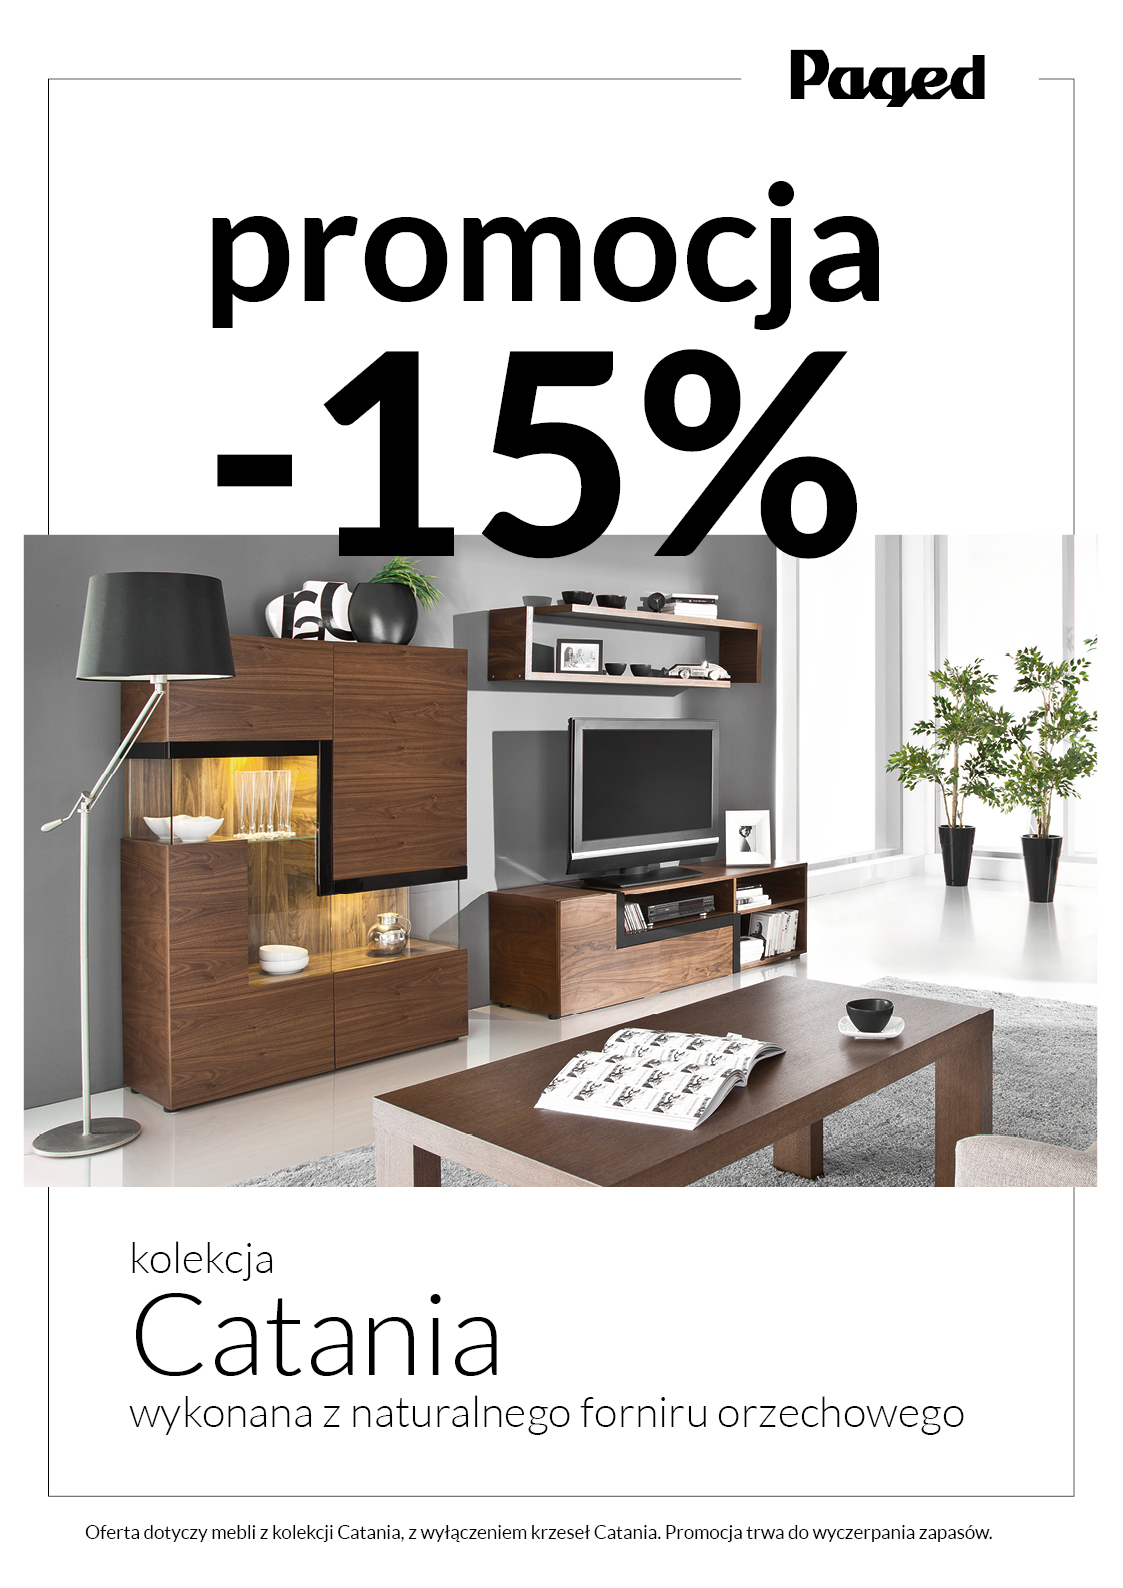 promocja_15_catania